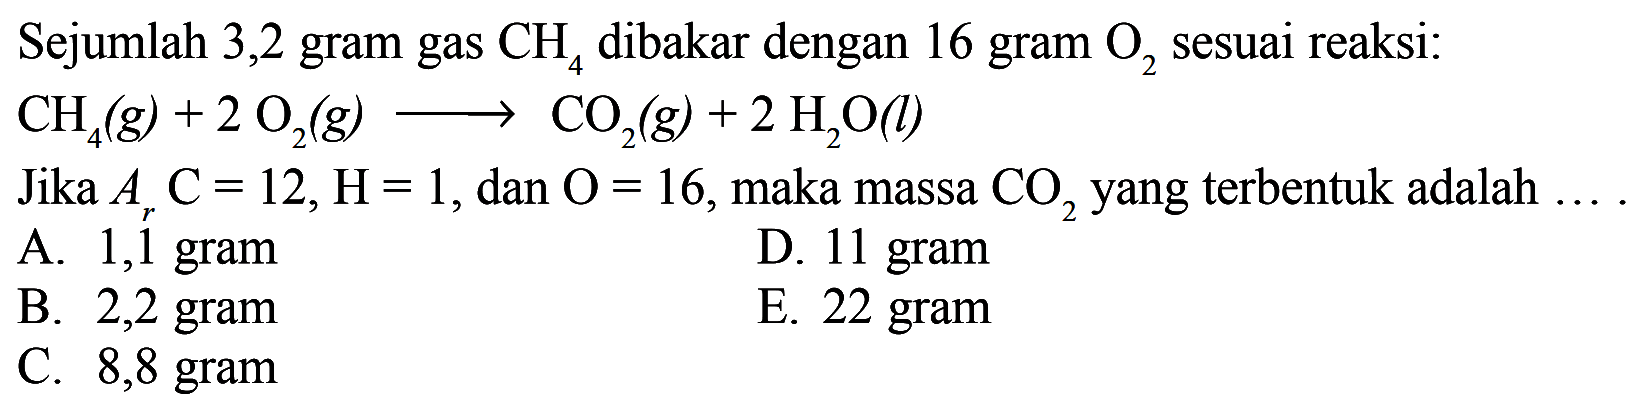 Sejumlah 3,2 gram gas CH4 dibakar dengan 16 gram O2 sesuai reaksi: CH4(g)+2 O2(g) -> CO2(g)+2 H2O(l)Jika Ar C=12, H=1, dan O=16, maka massa CO2 yang terbentuk adalah ...